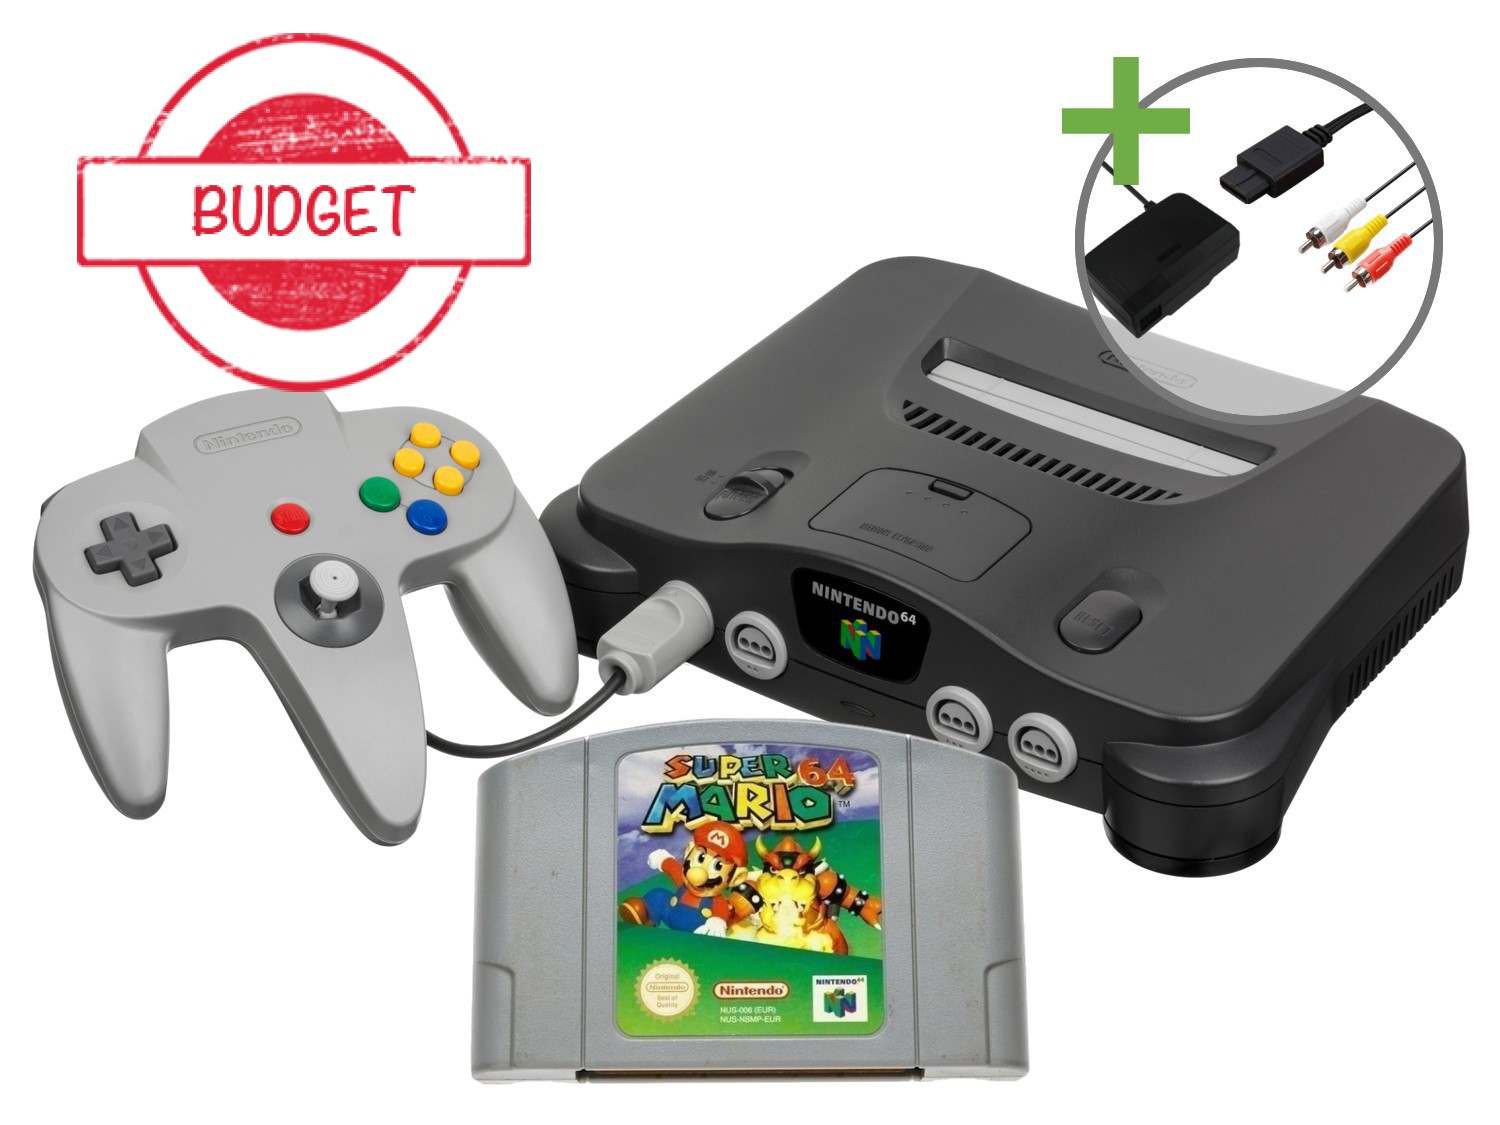 Nintendo 64 Starter Pack - Super Mario 64 Edition - Budget Kopen | Nintendo 64 Hardware